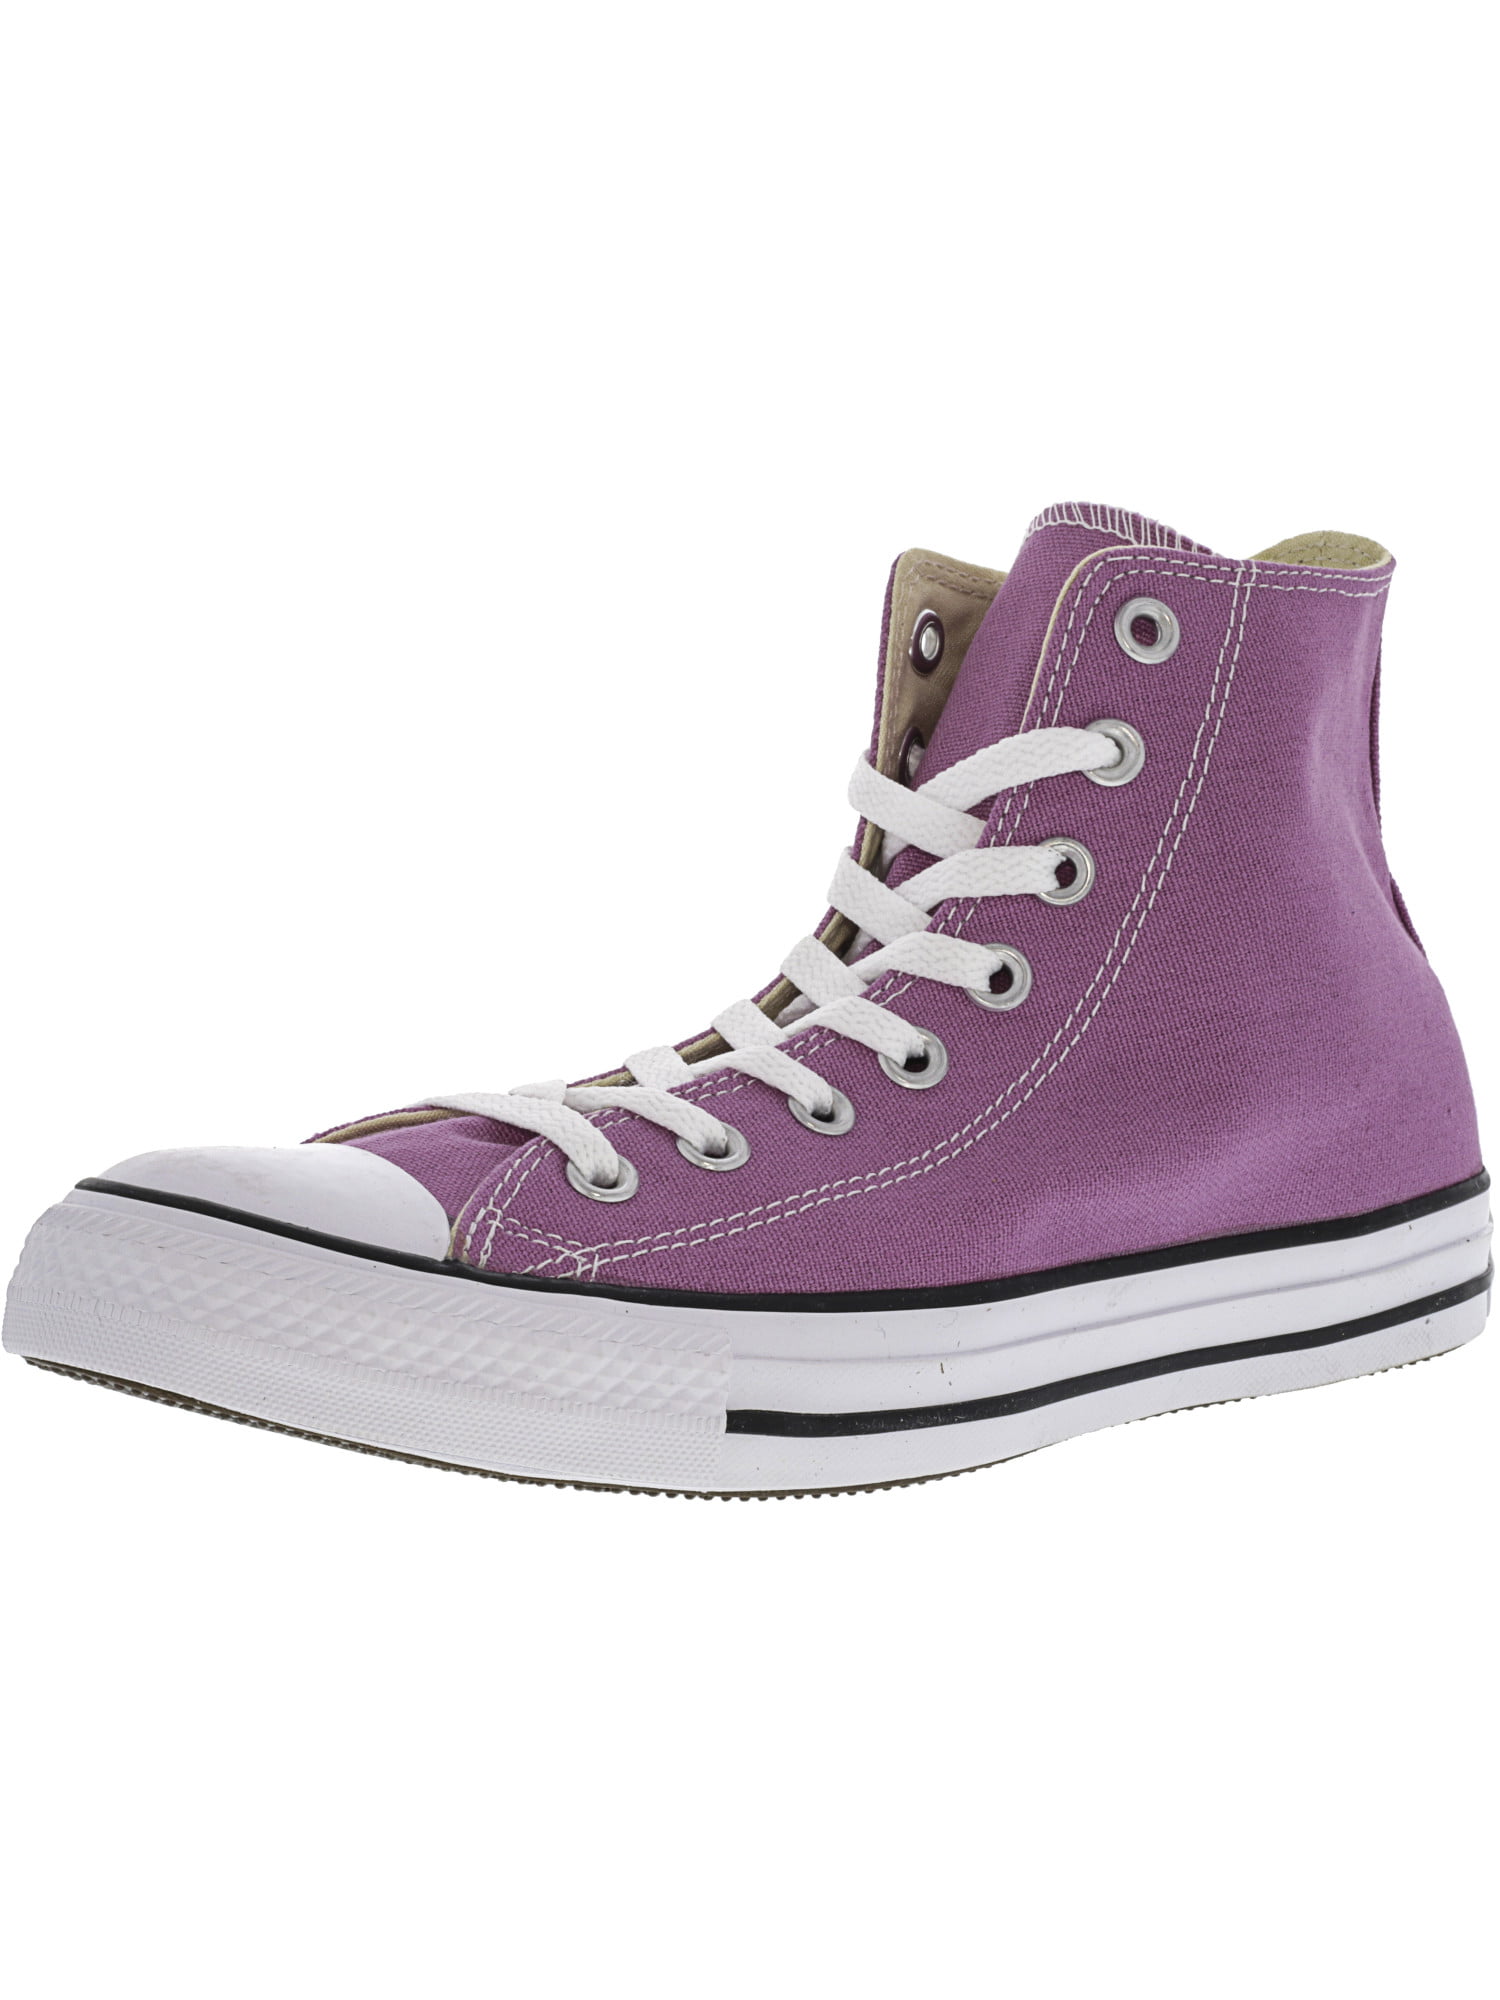 Converse - Converse Chuck Taylor All Star Hi Powder Purple High-Top Fashion  Sneaker - 9.5M / 7.5M - Walmart.com - Walmart.com